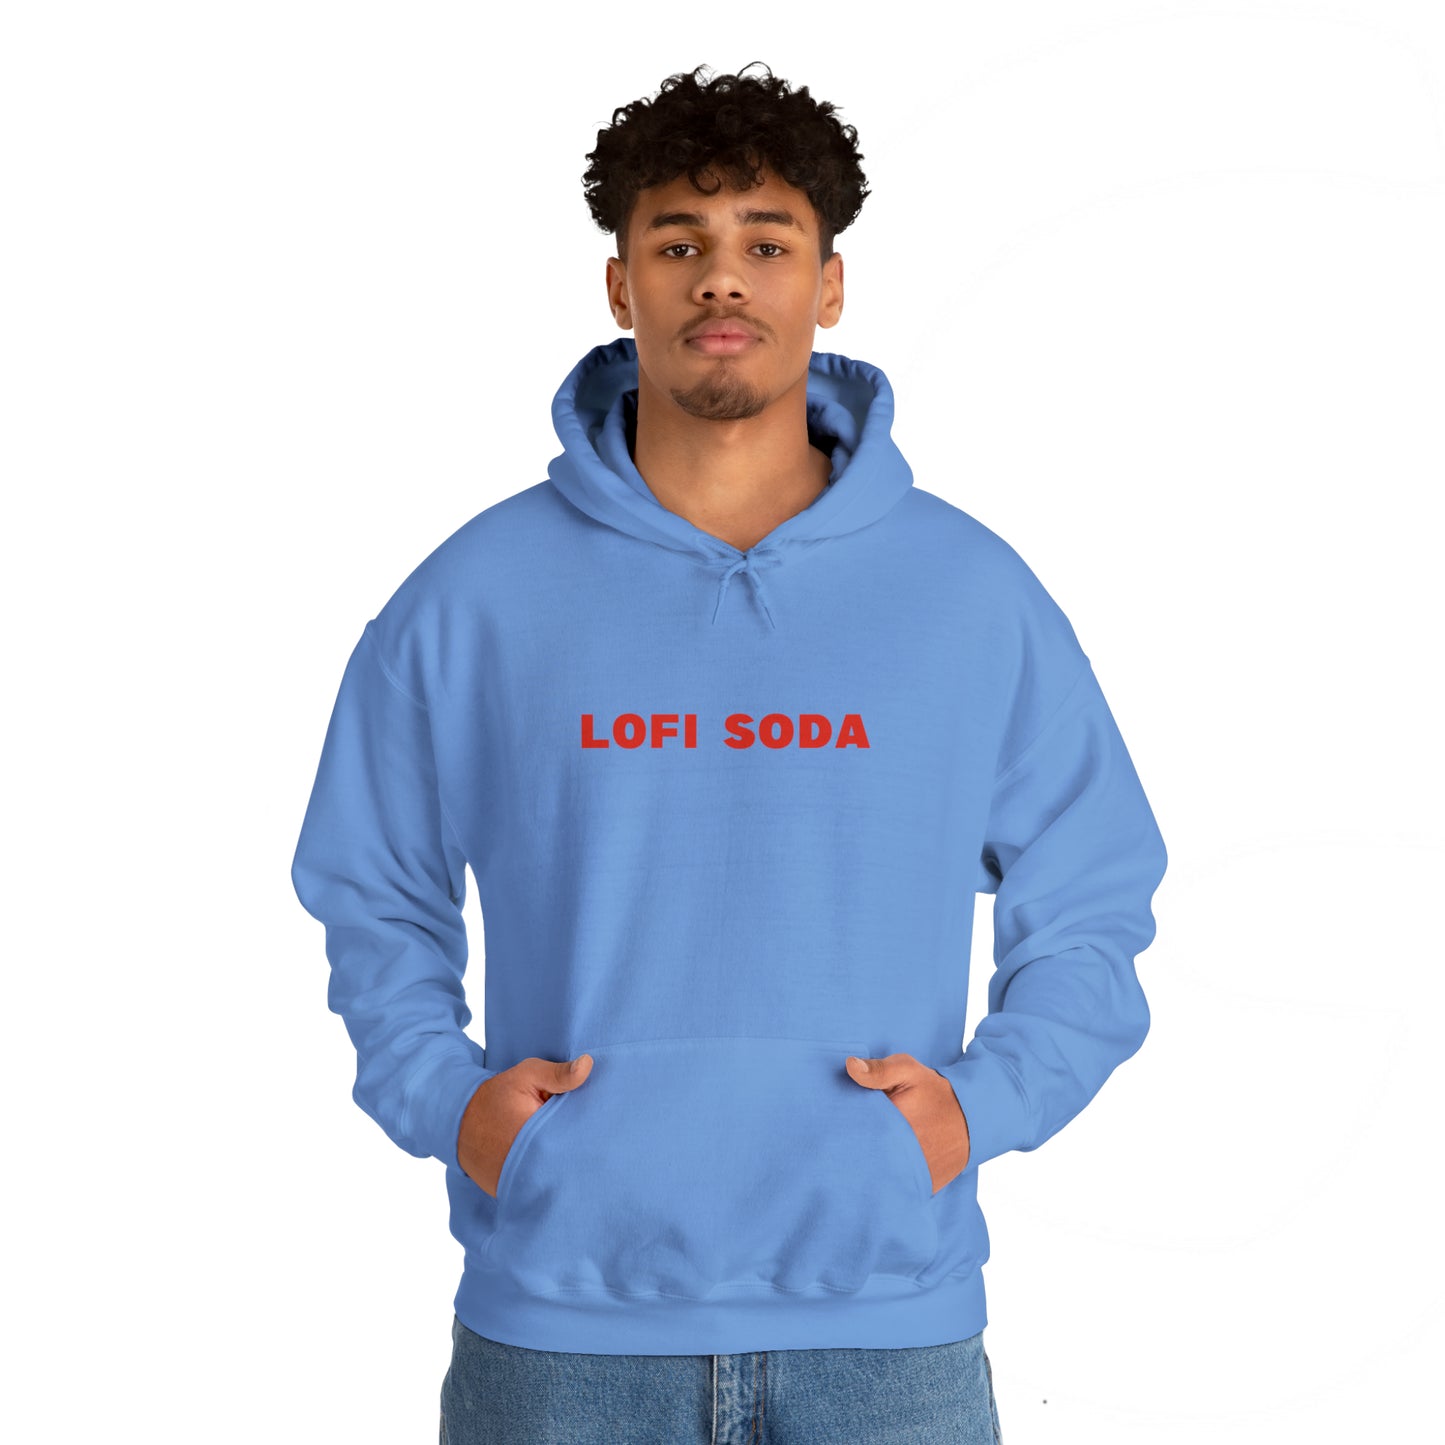 LOFI SODA - Unisex Hoodie